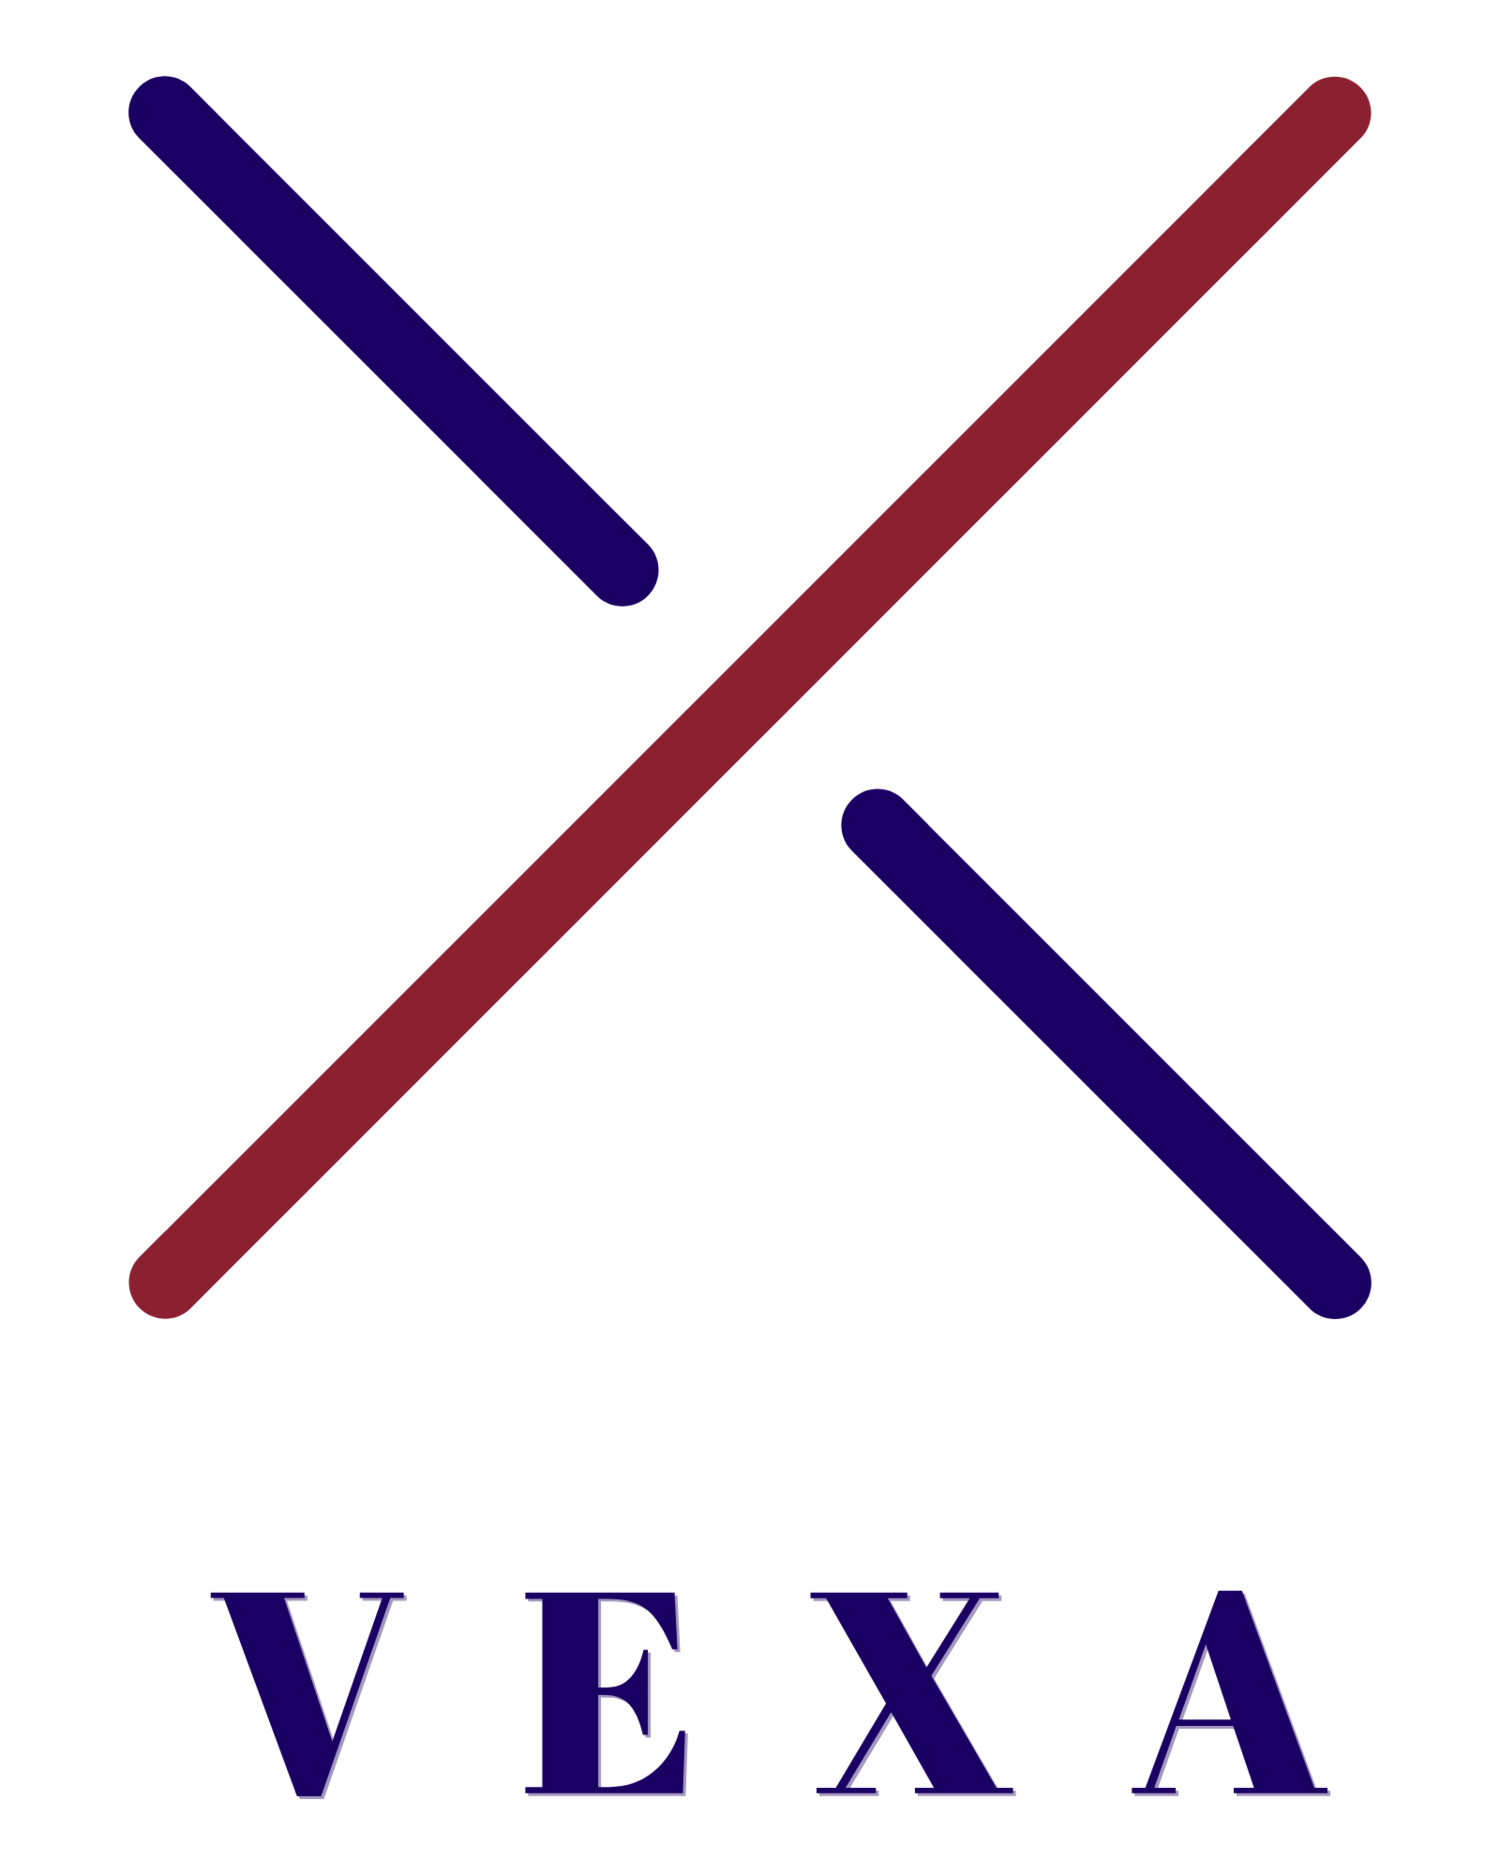 The VEXAGroup